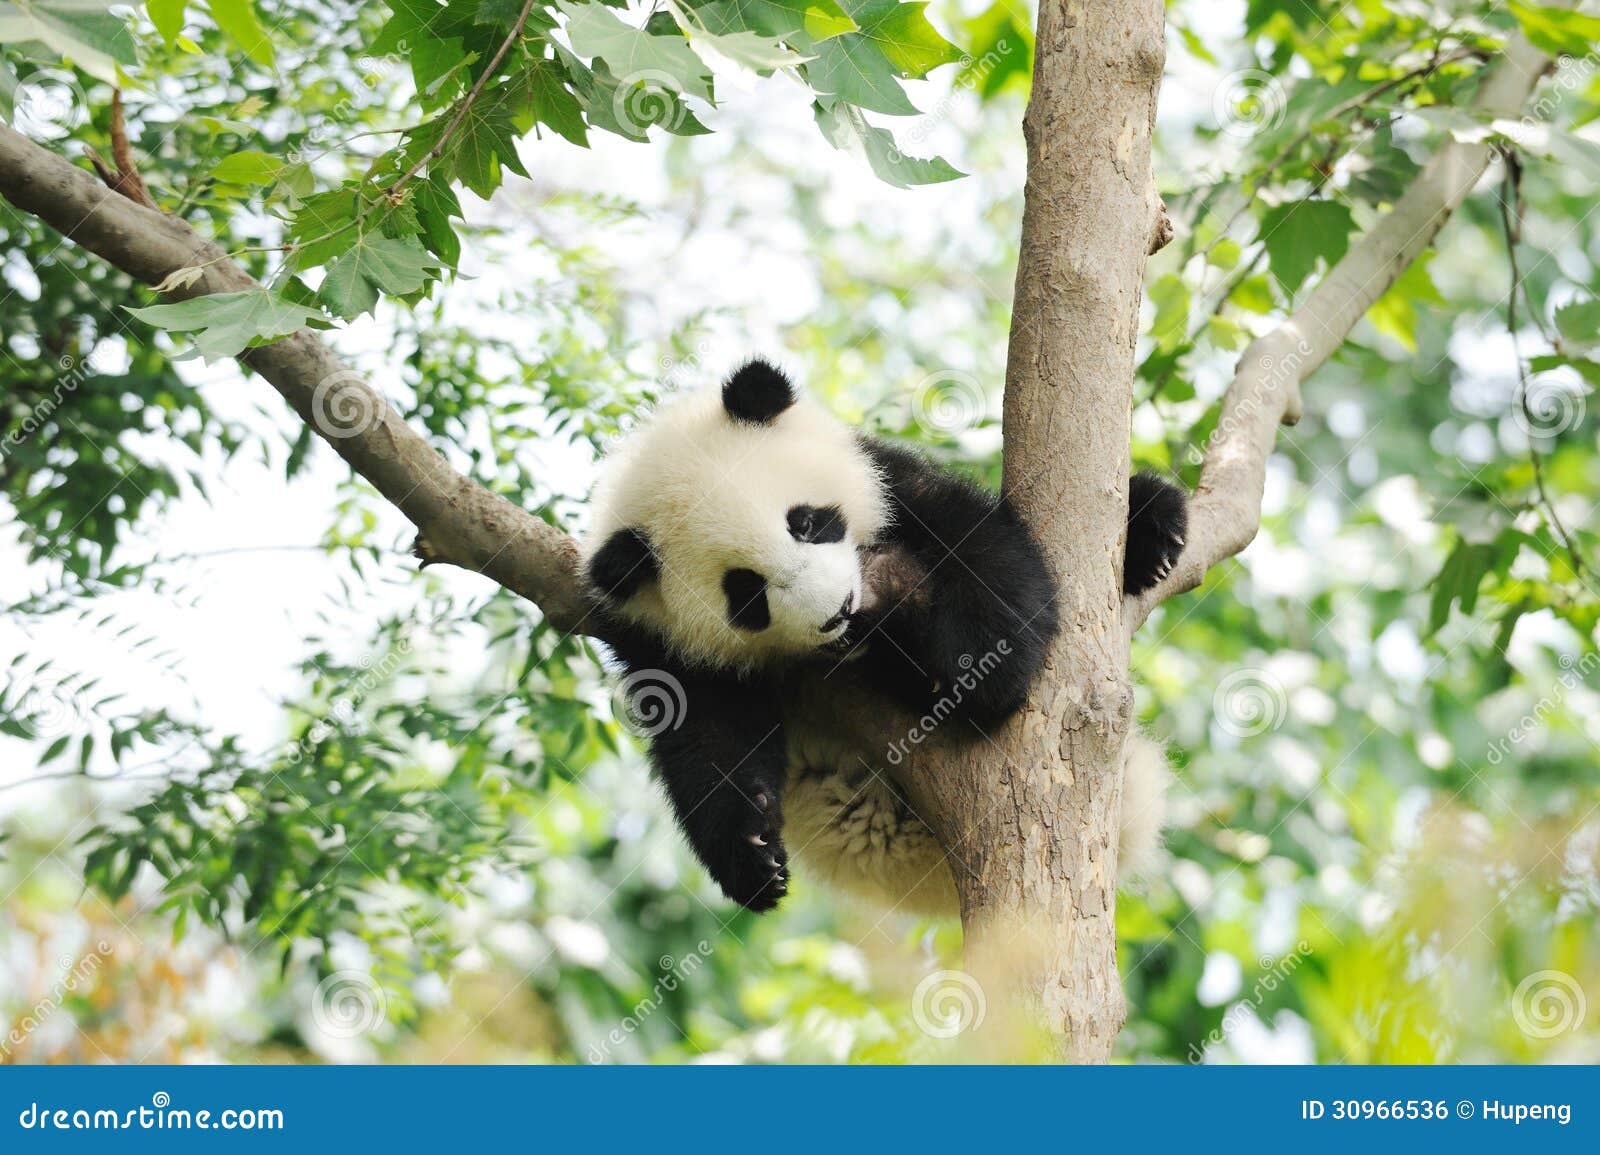 baby panda on the tree